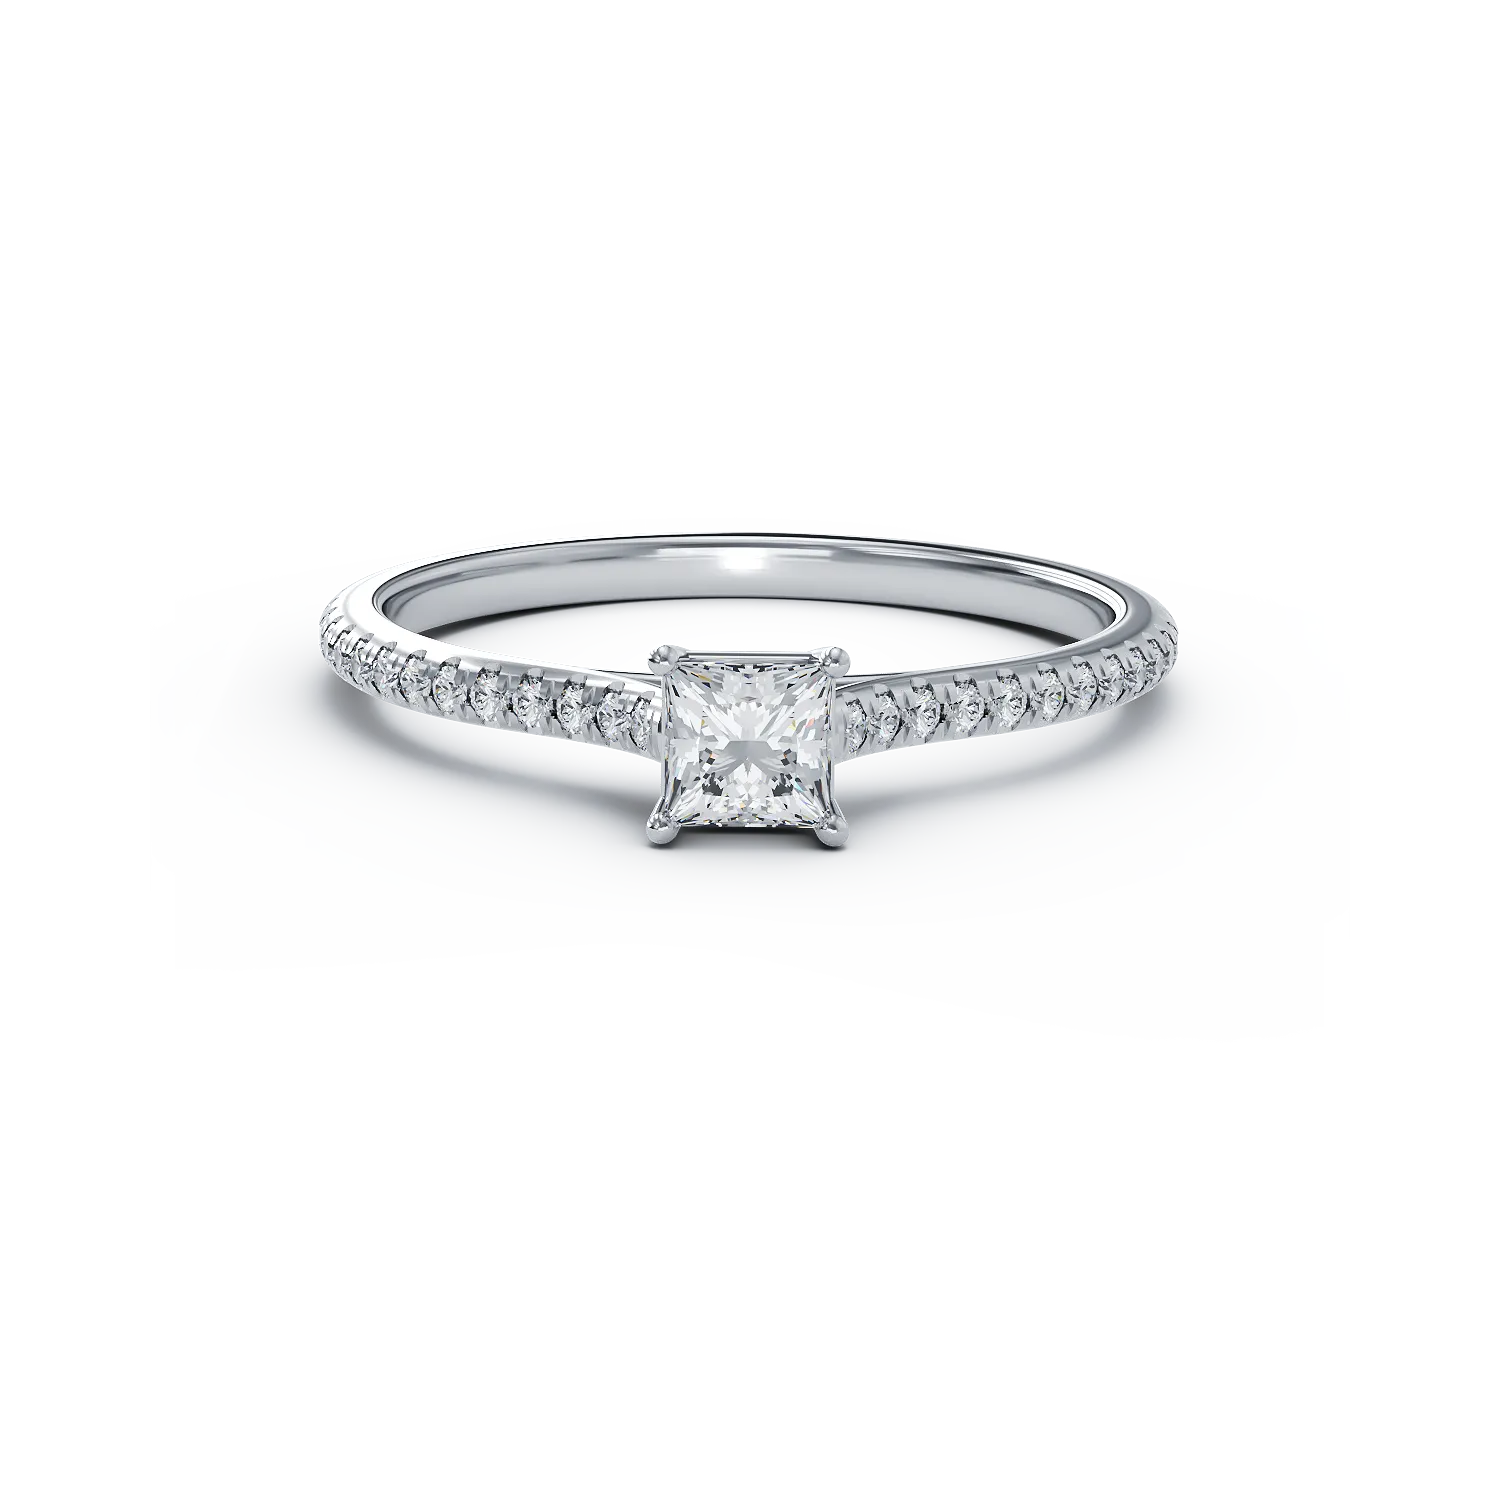 Platinum engagement ring with 0.32ct diamond and 0.17ct diamonds